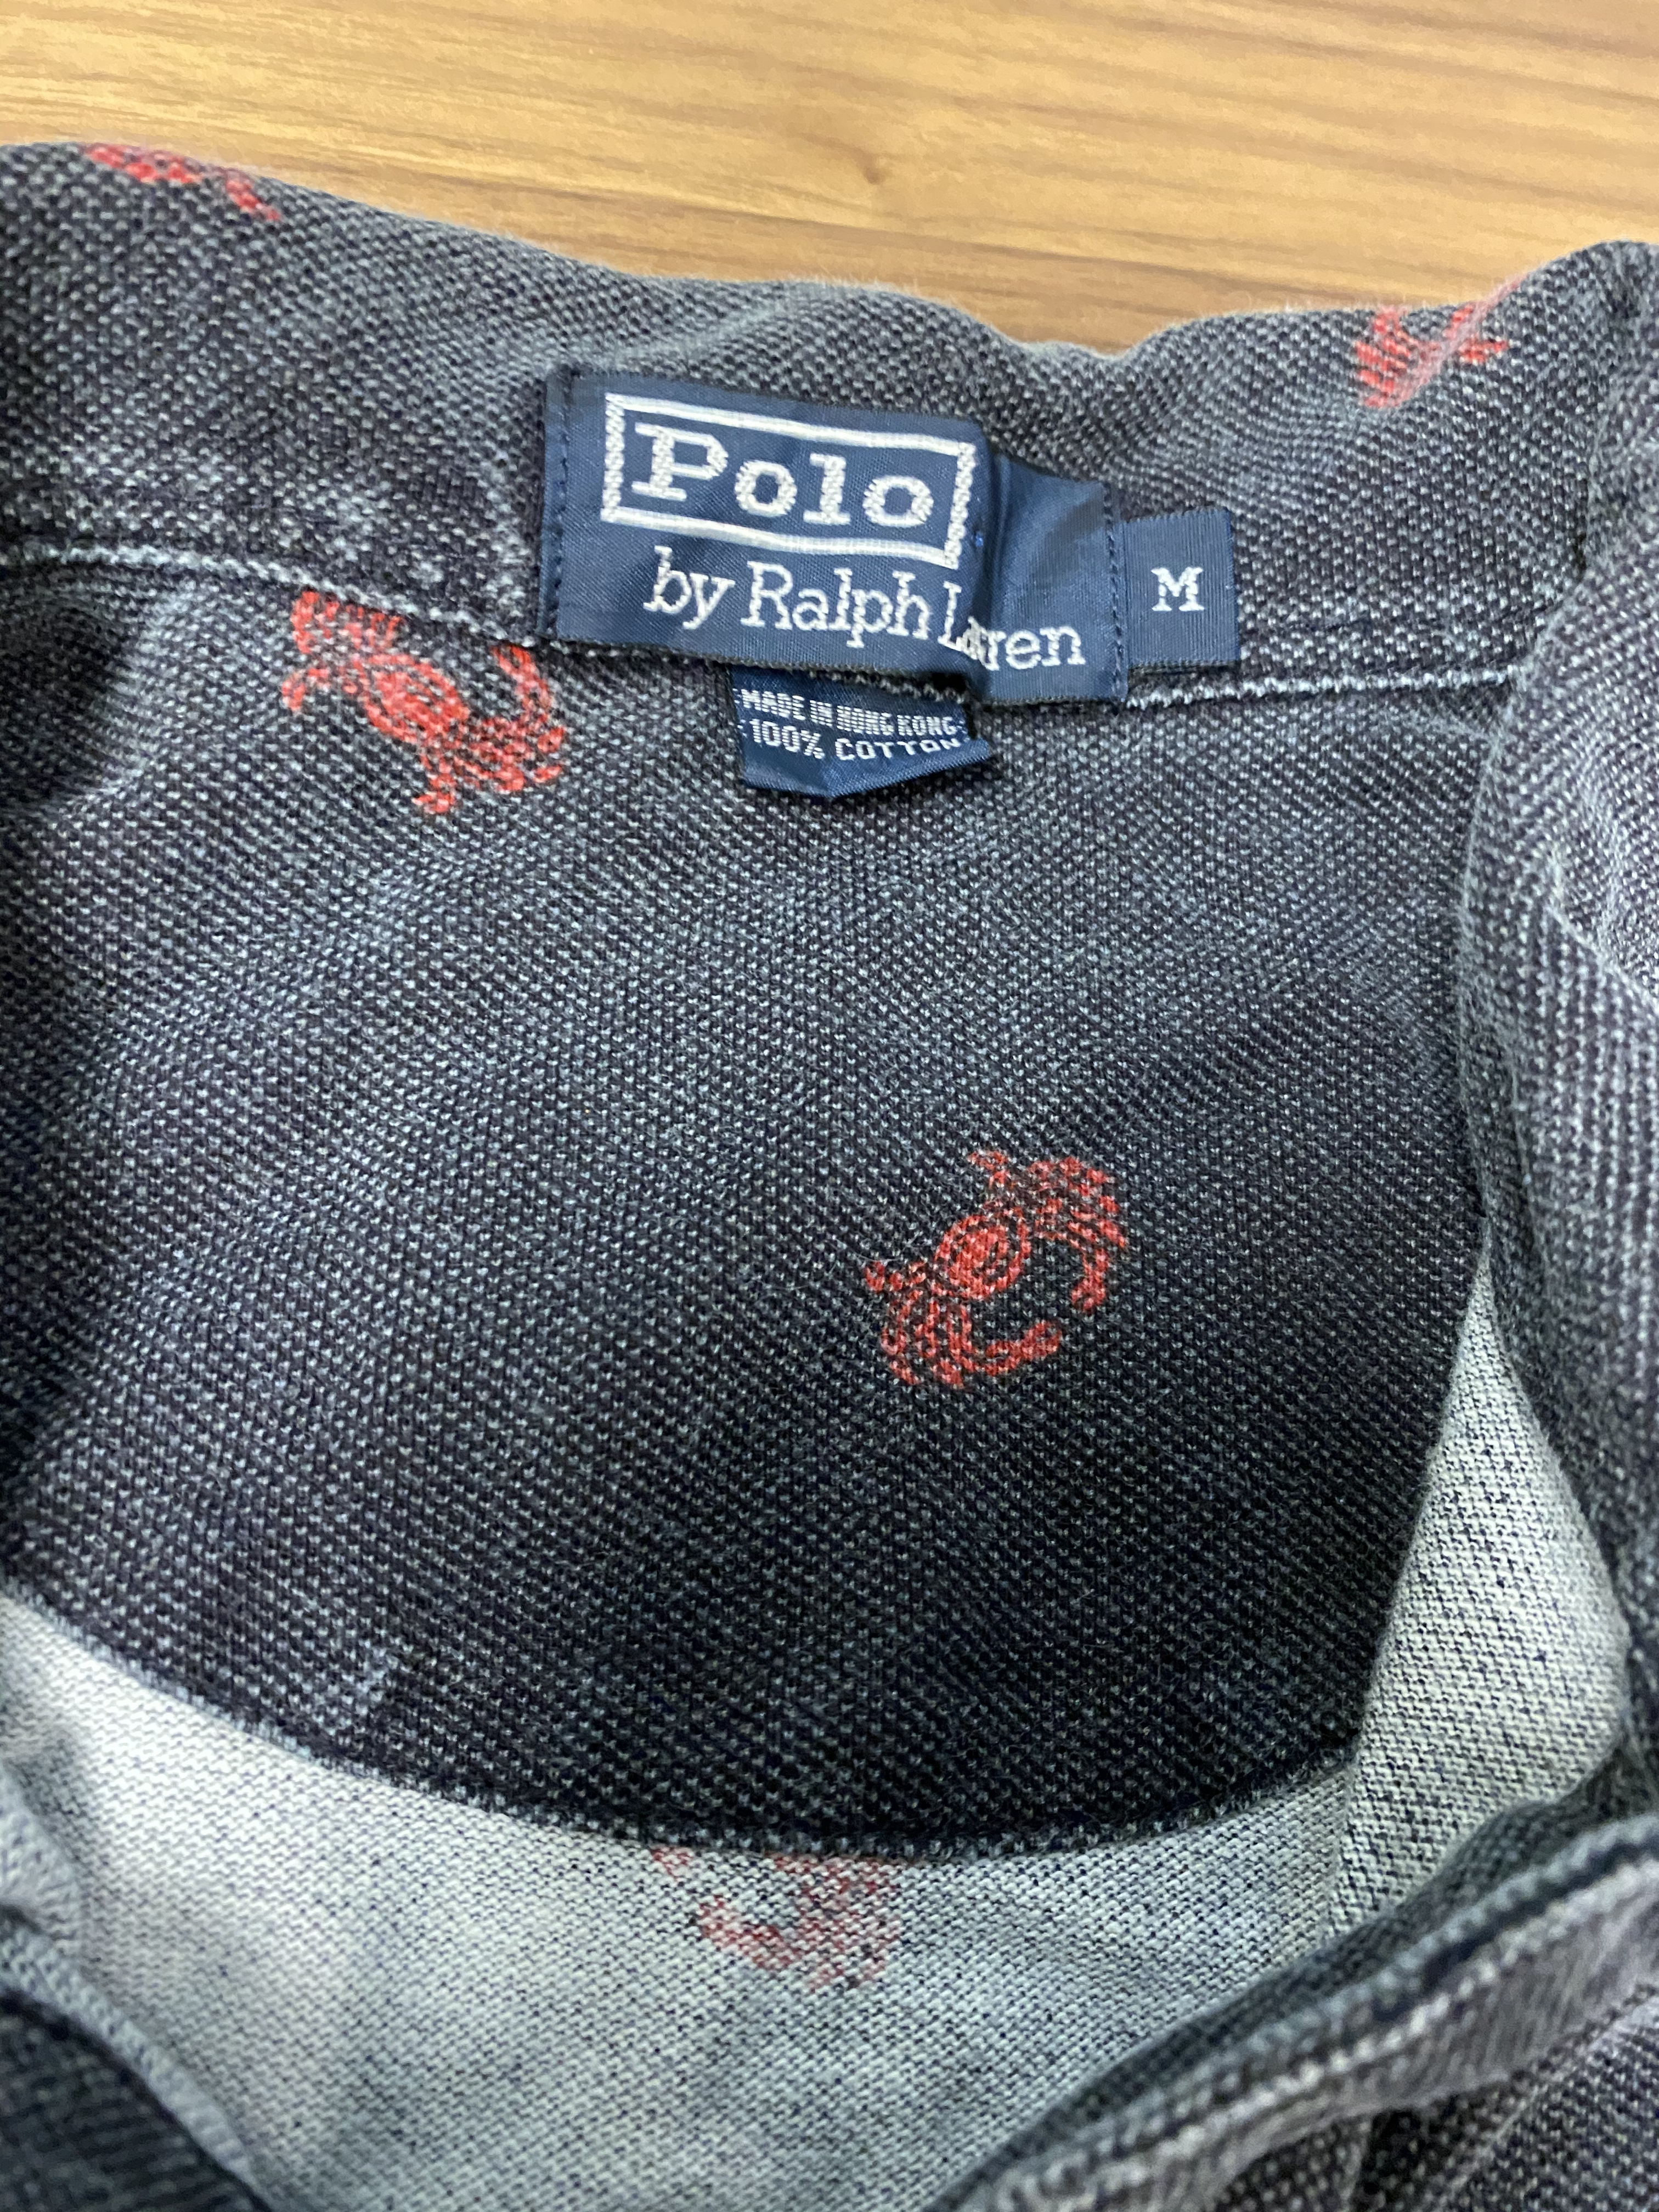 Polo by Ralph Lauren Crab Polo Shirt - Navy